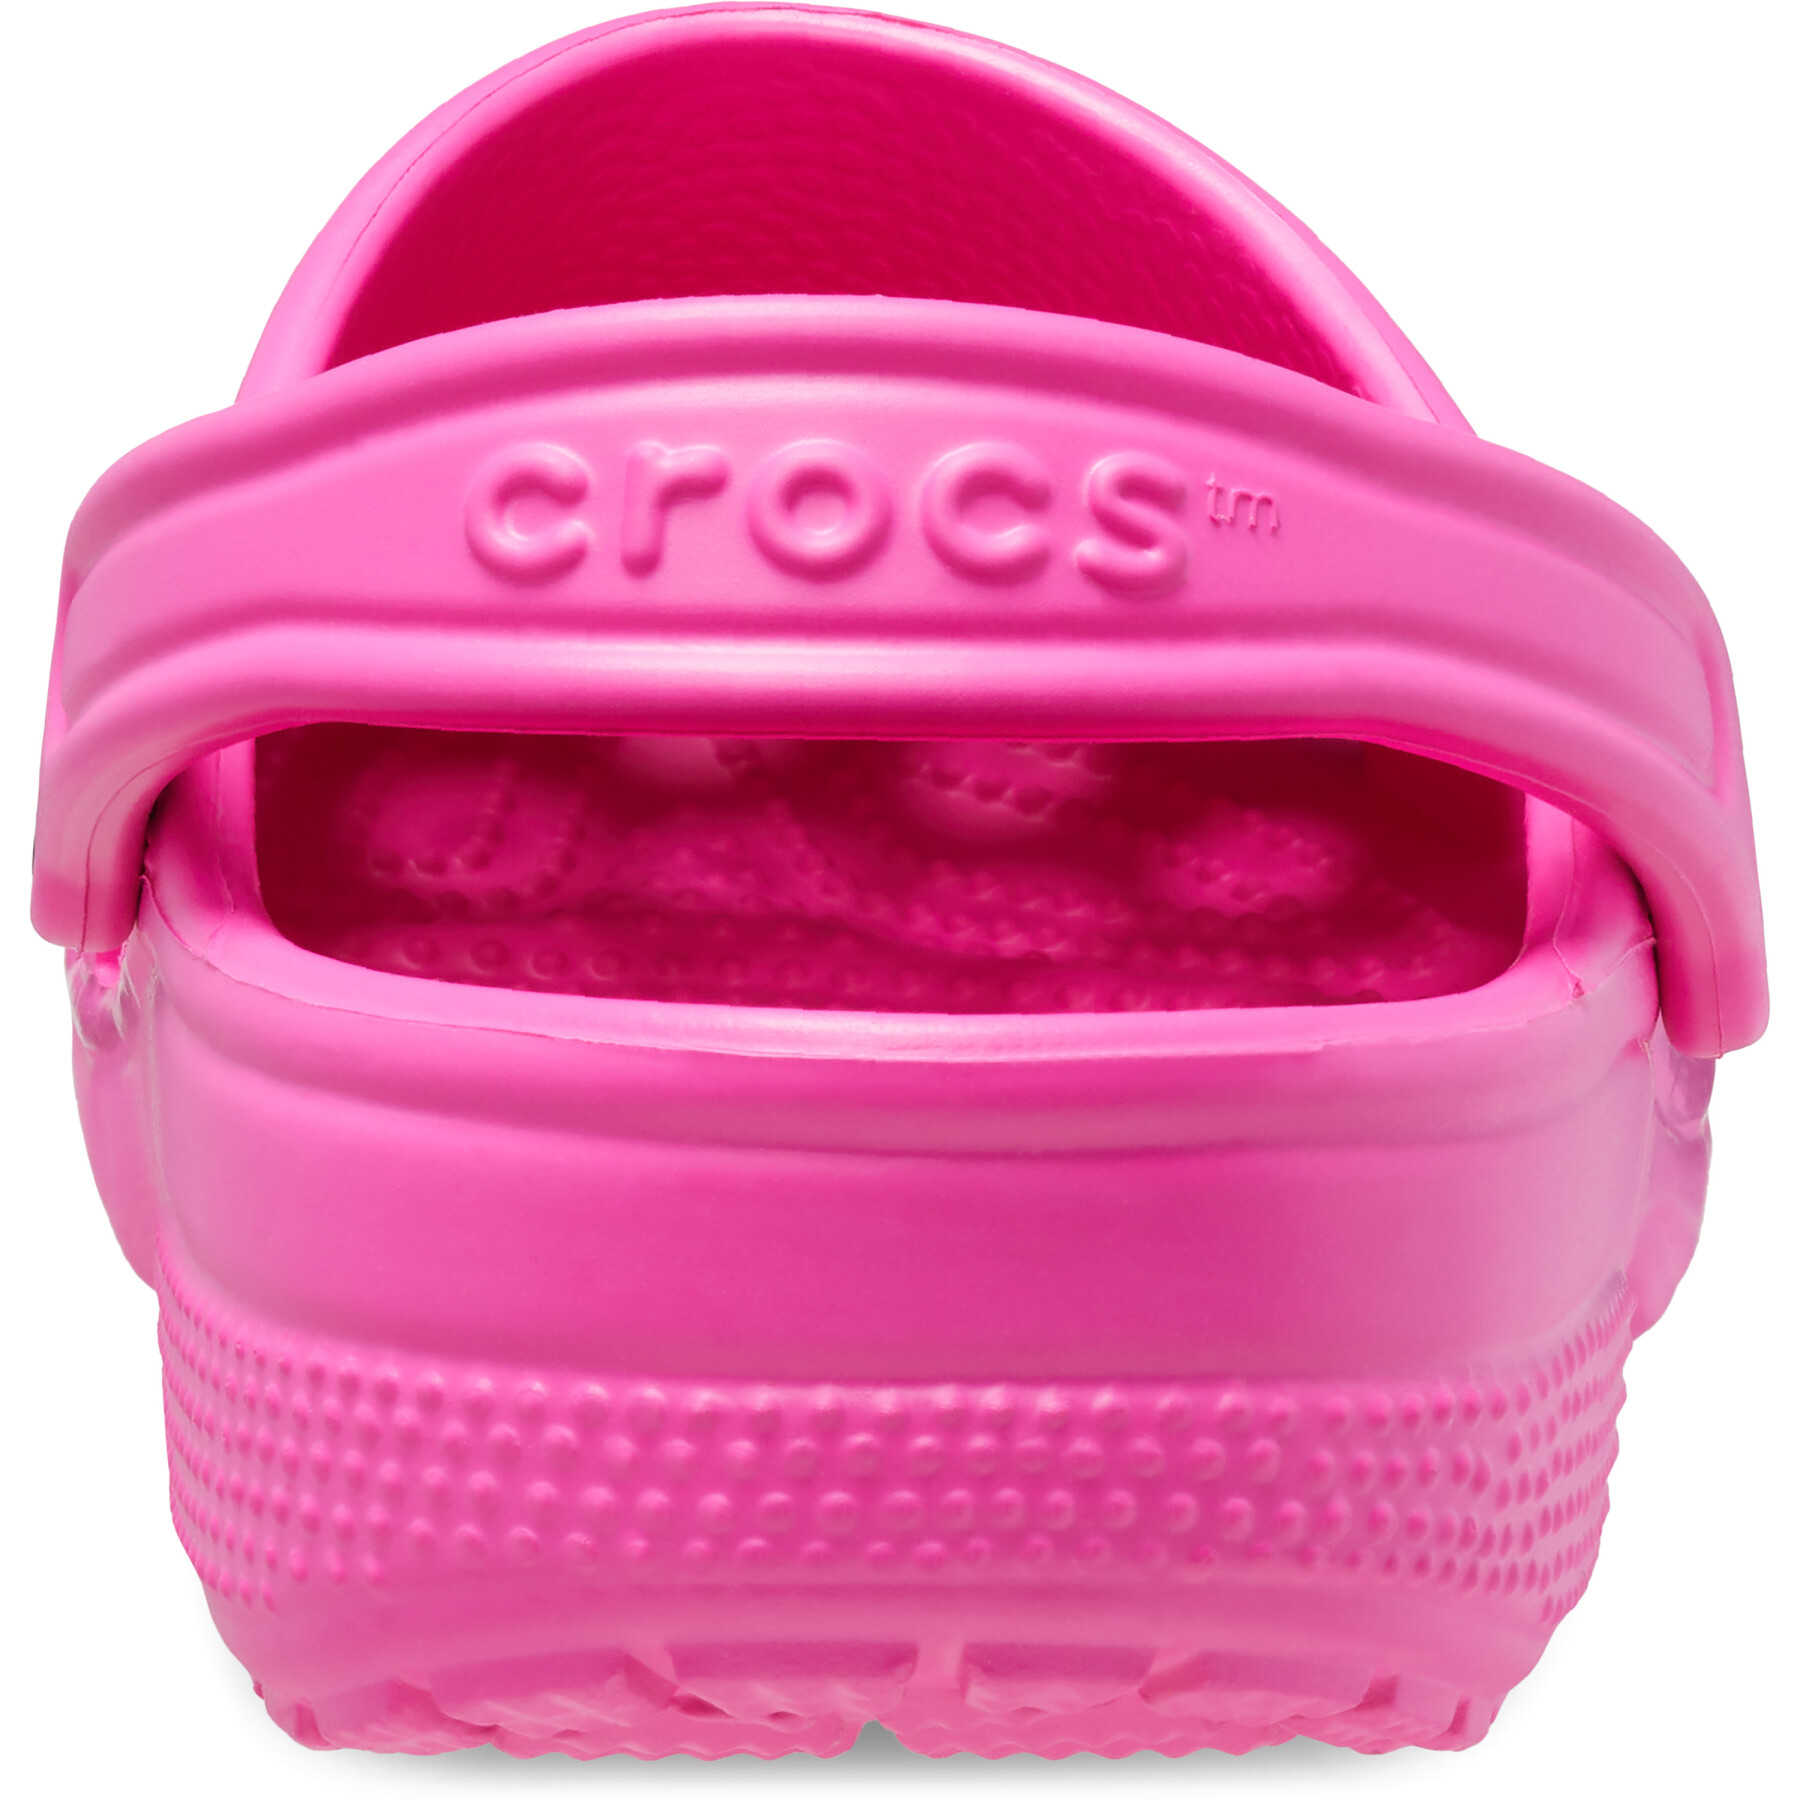 Zuecos Crocs Classic